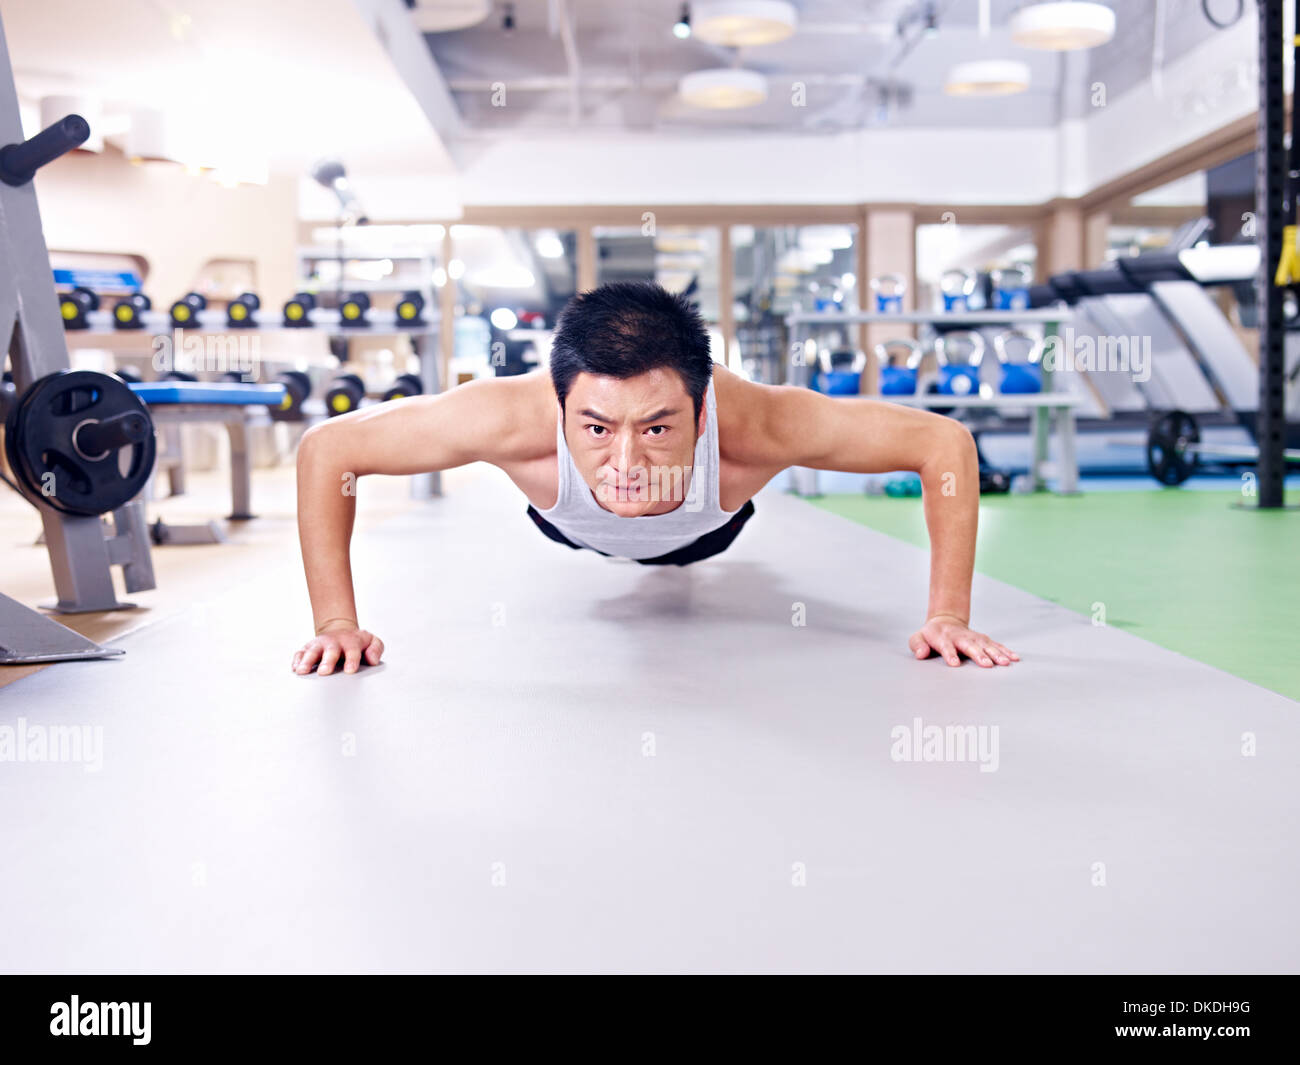 man doing push-ups on gym floor. Stock Photo